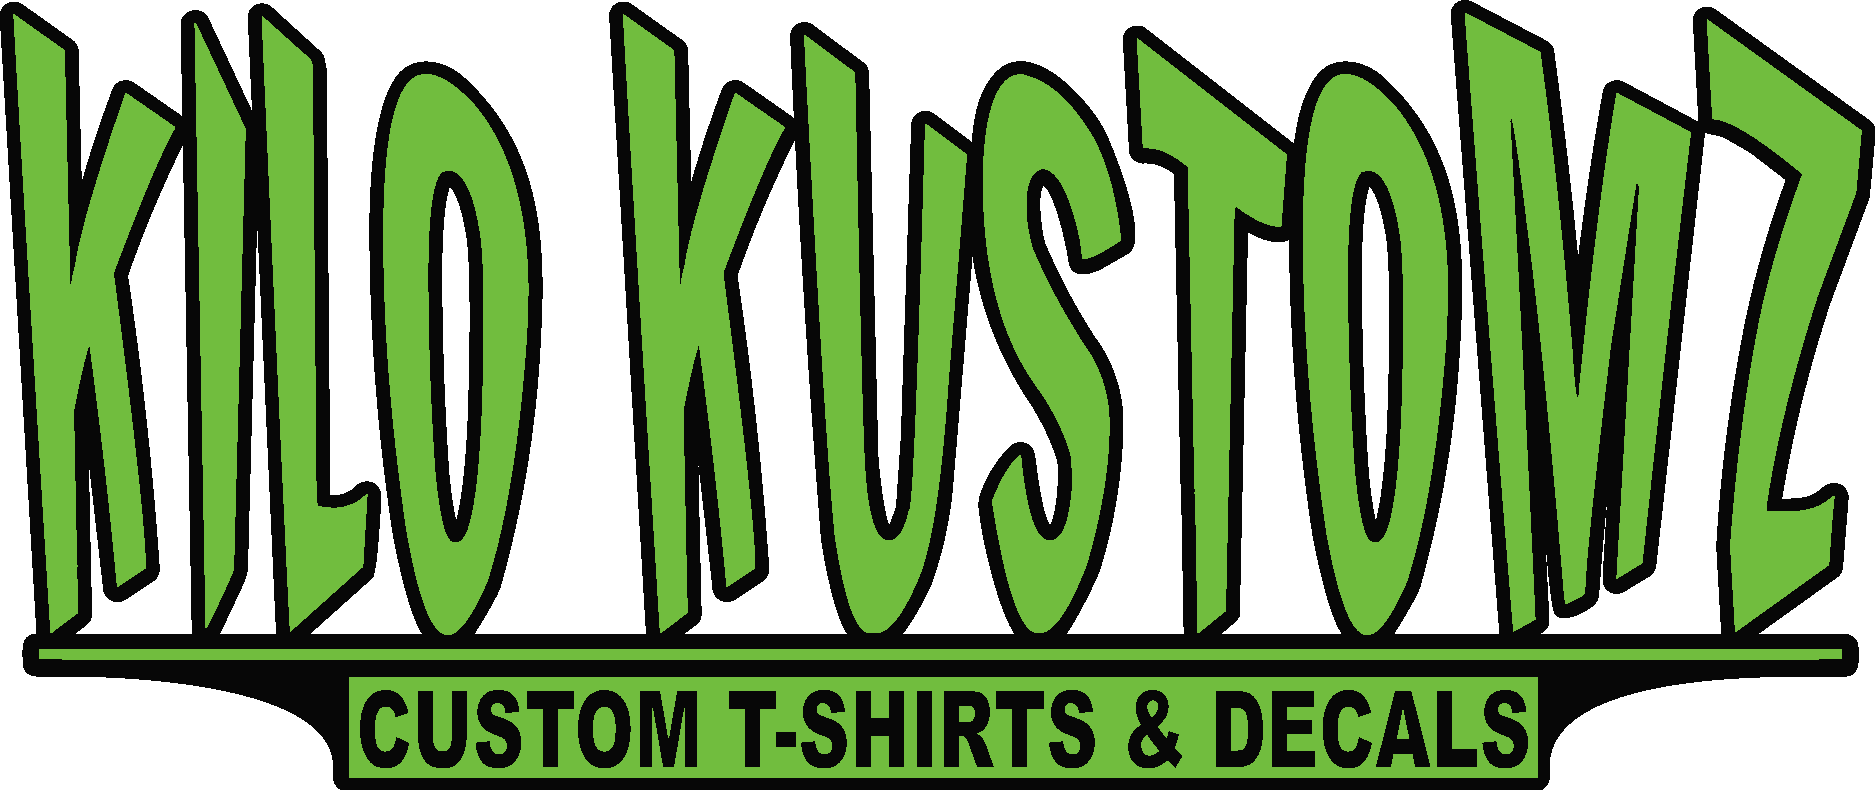 Kilo Kustomz Logo Vector